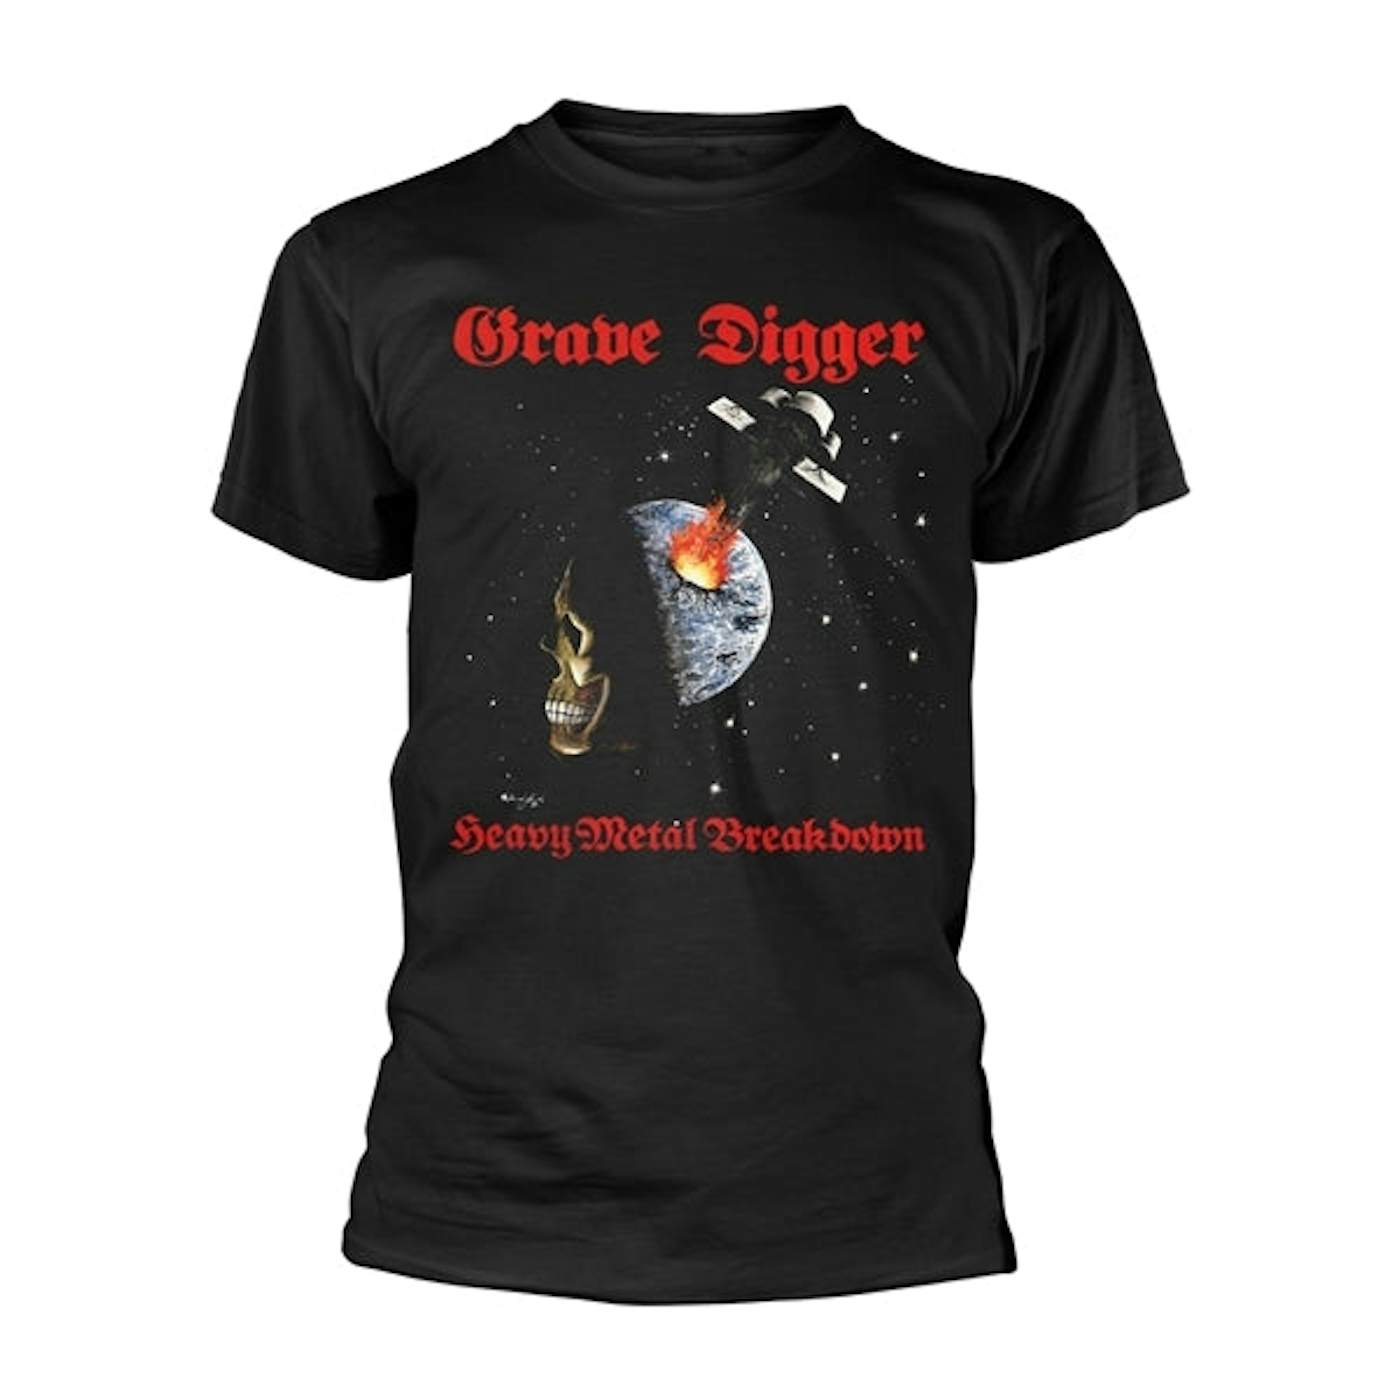 Grave Digger T Shirt - Heavy Metal Breakdown